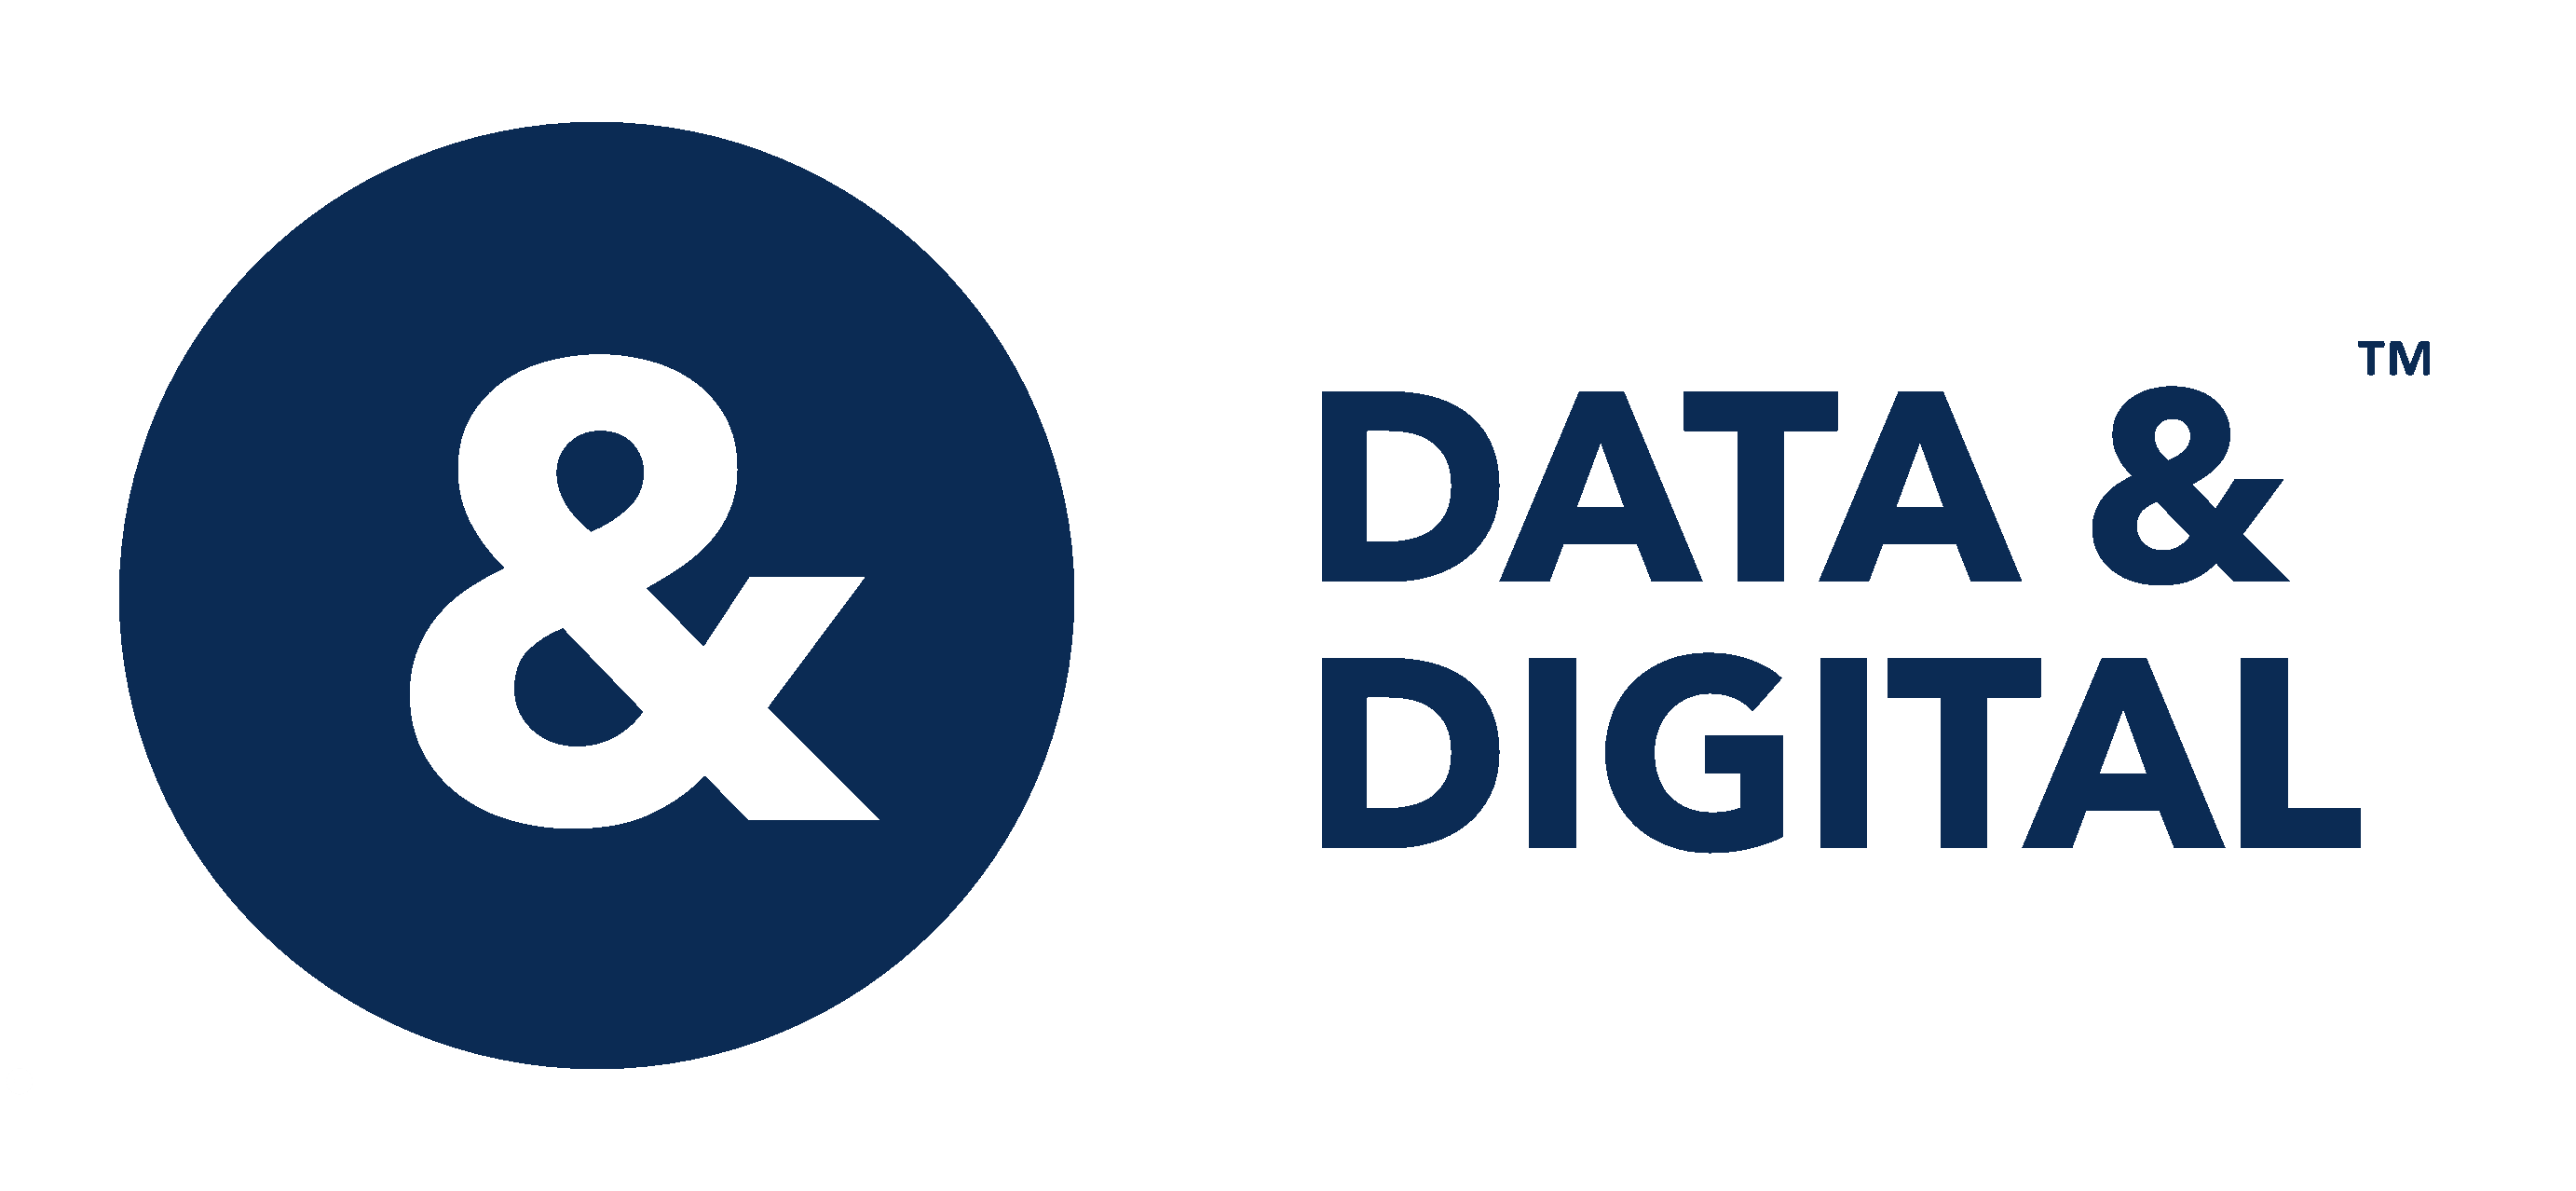 Data & Digital ™